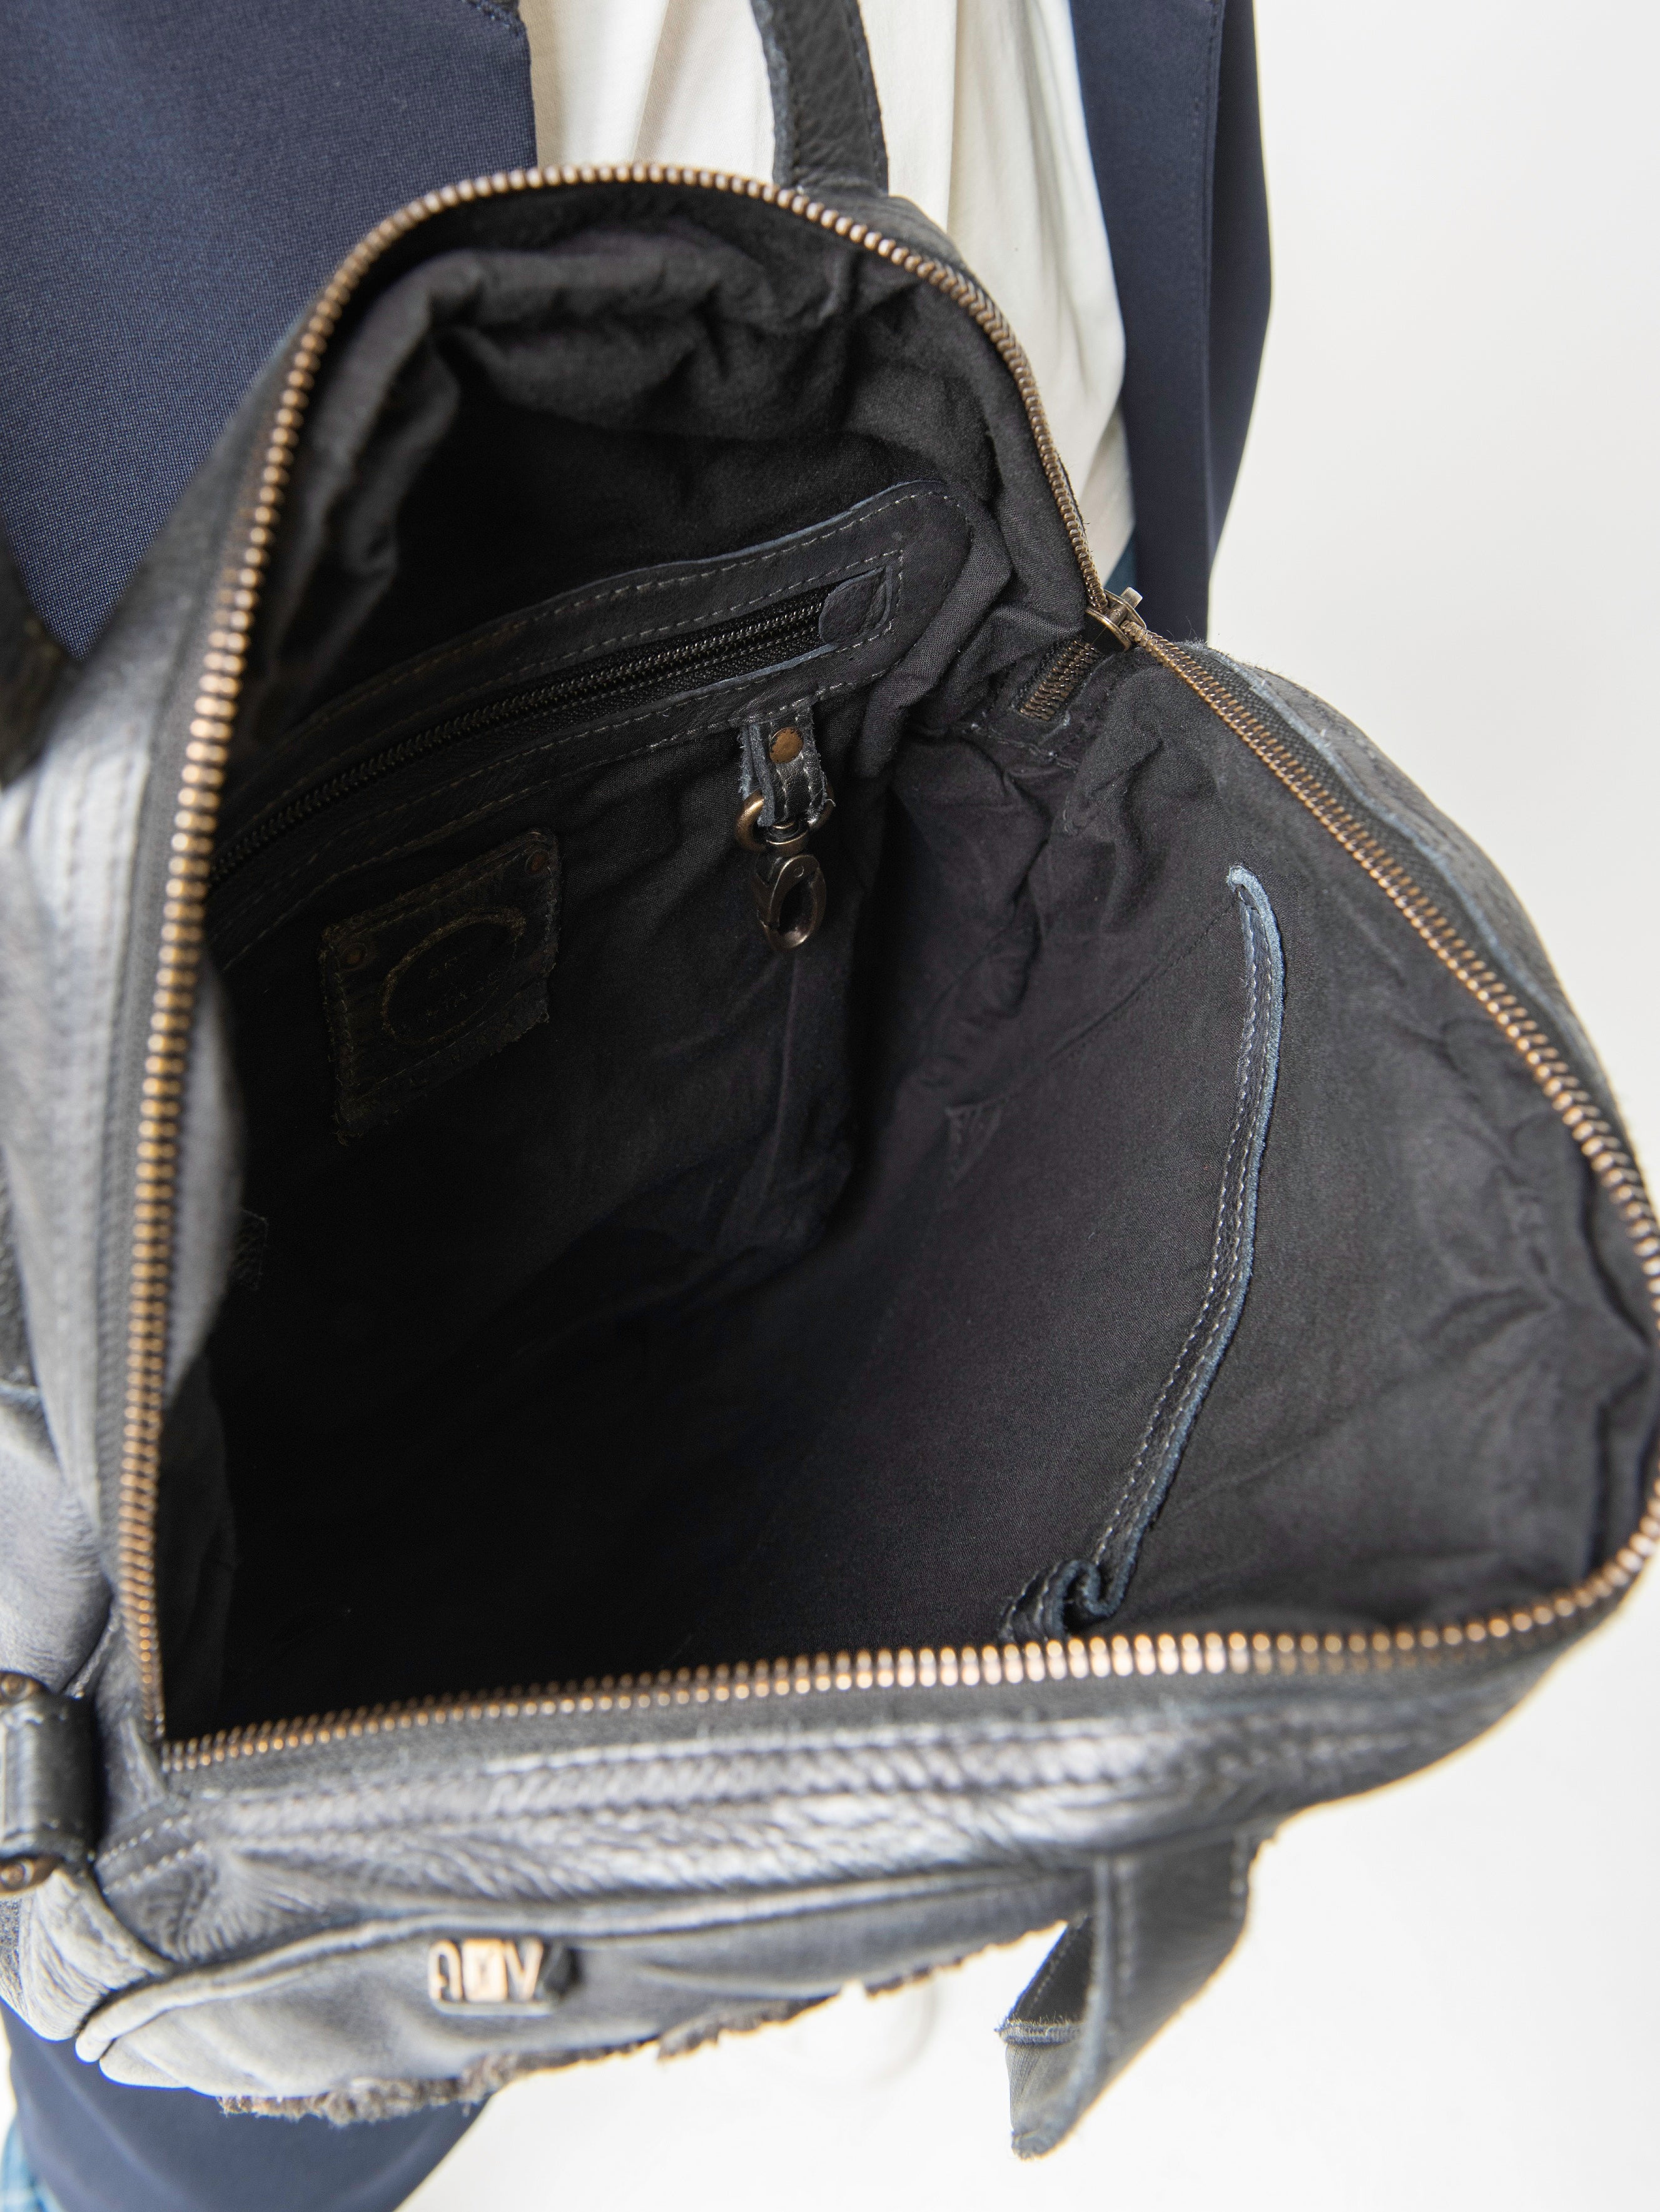 PARMA: Black leather round shape handbag by Art N Vintage